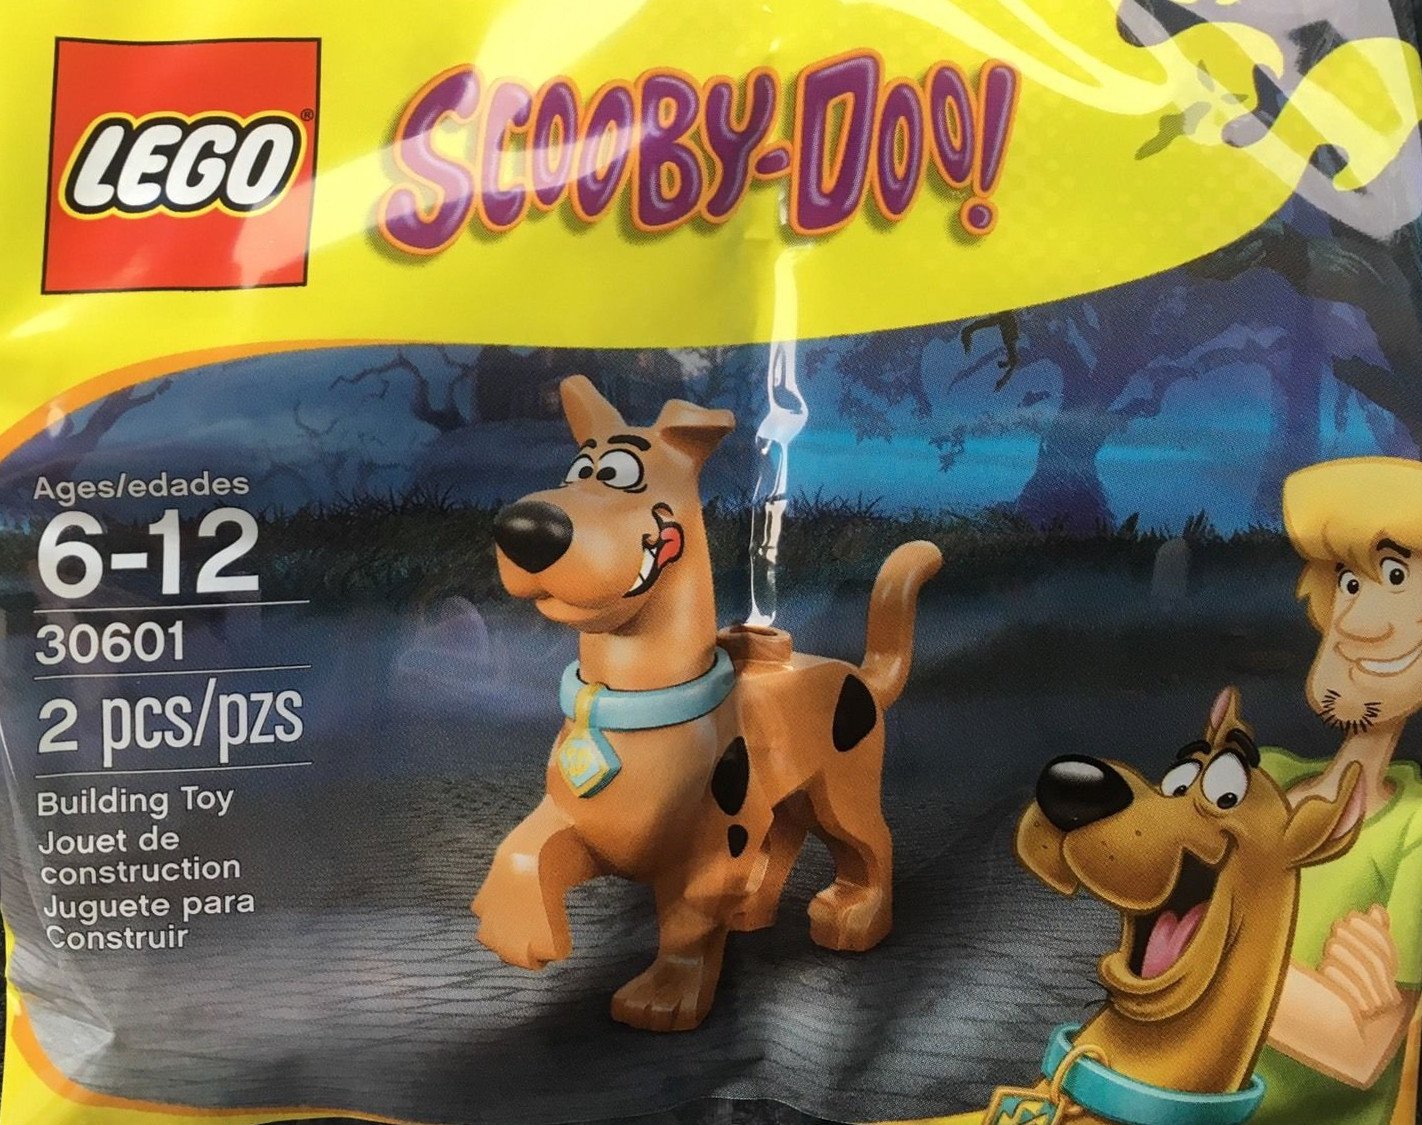 Lego Scooby Doo Scooby Doo Exclusive Polybag Set